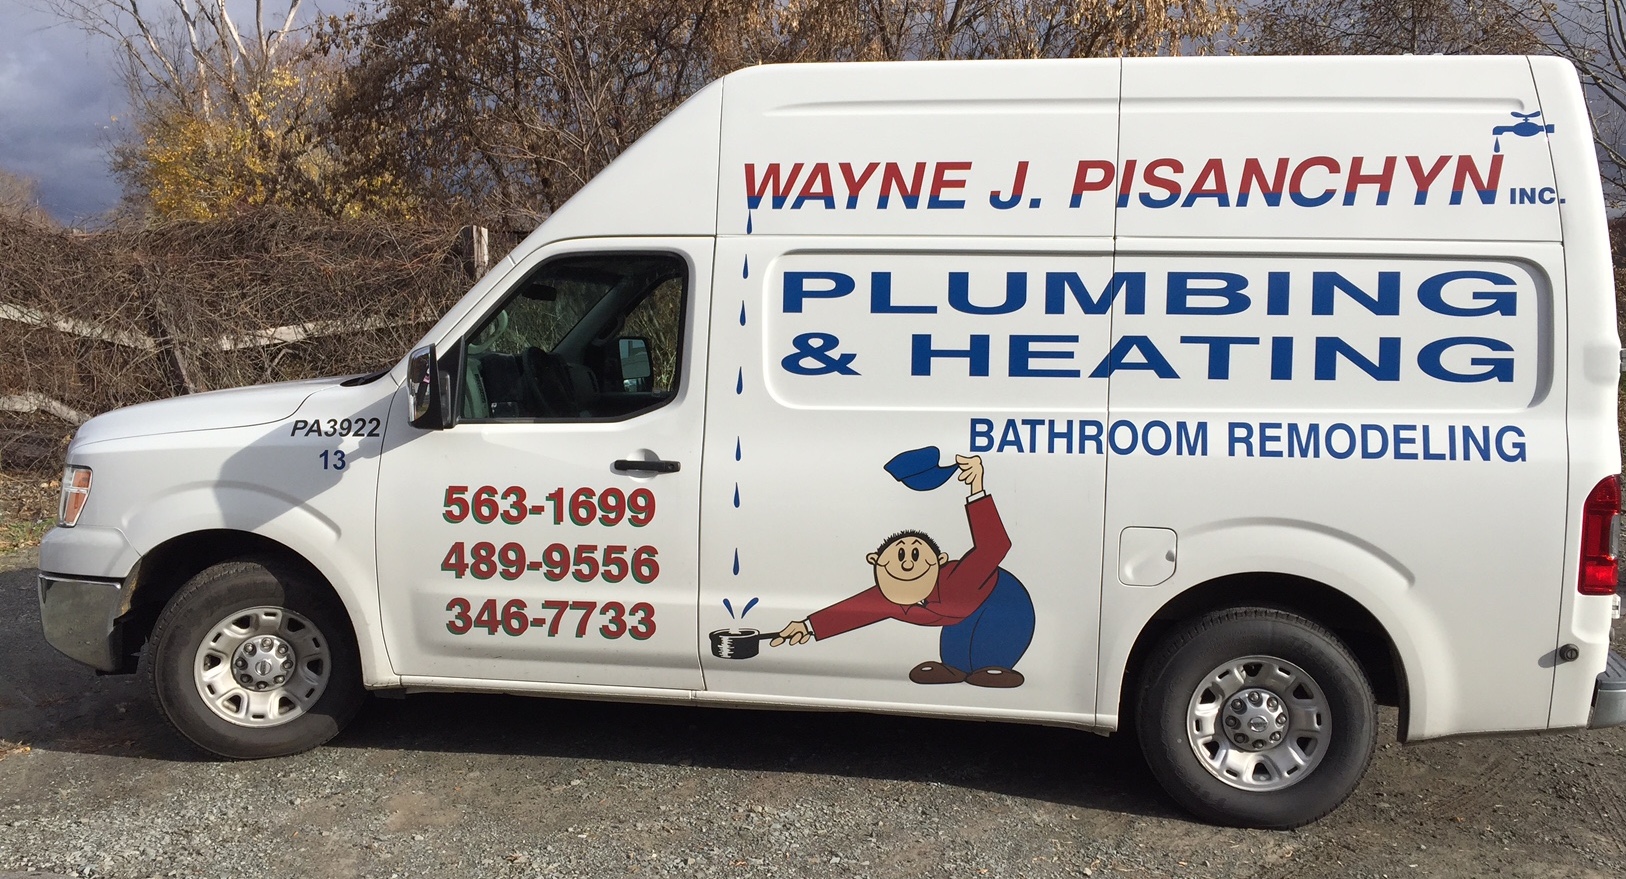 Wayne J. Pisanchyn Inc. Plumbing & Heating